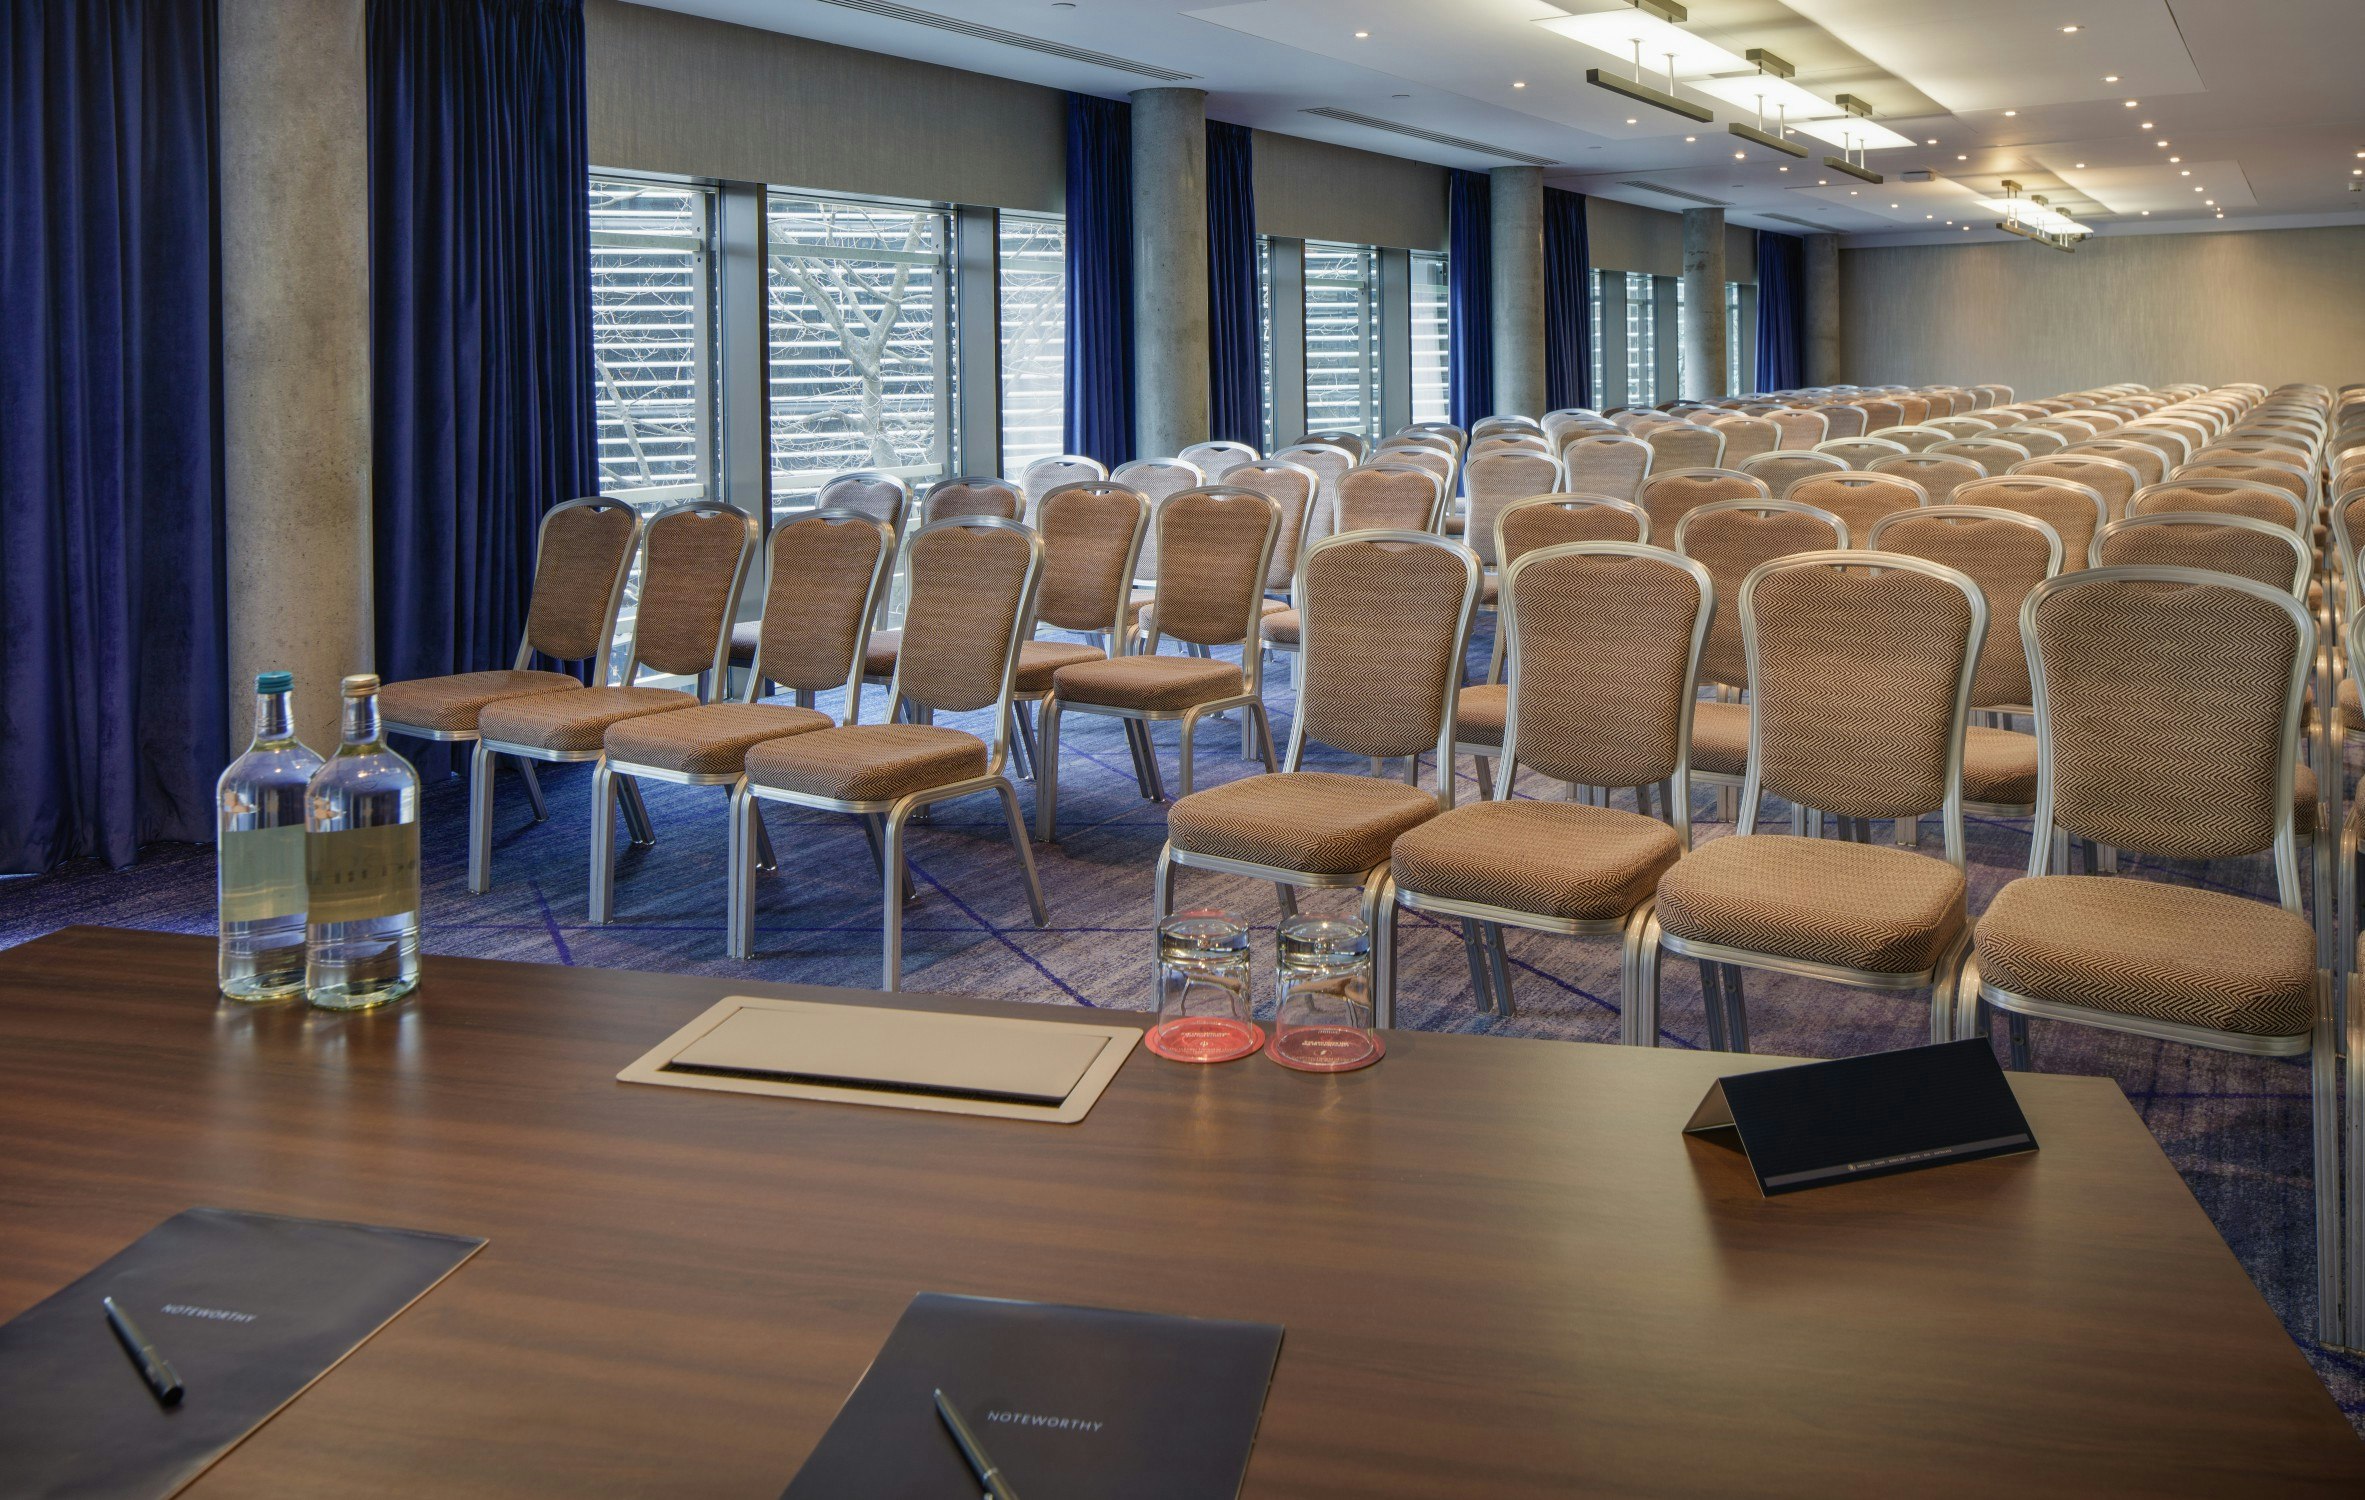 Hilton London Tower Bridge - Meeting Room 2/3/4 image 2